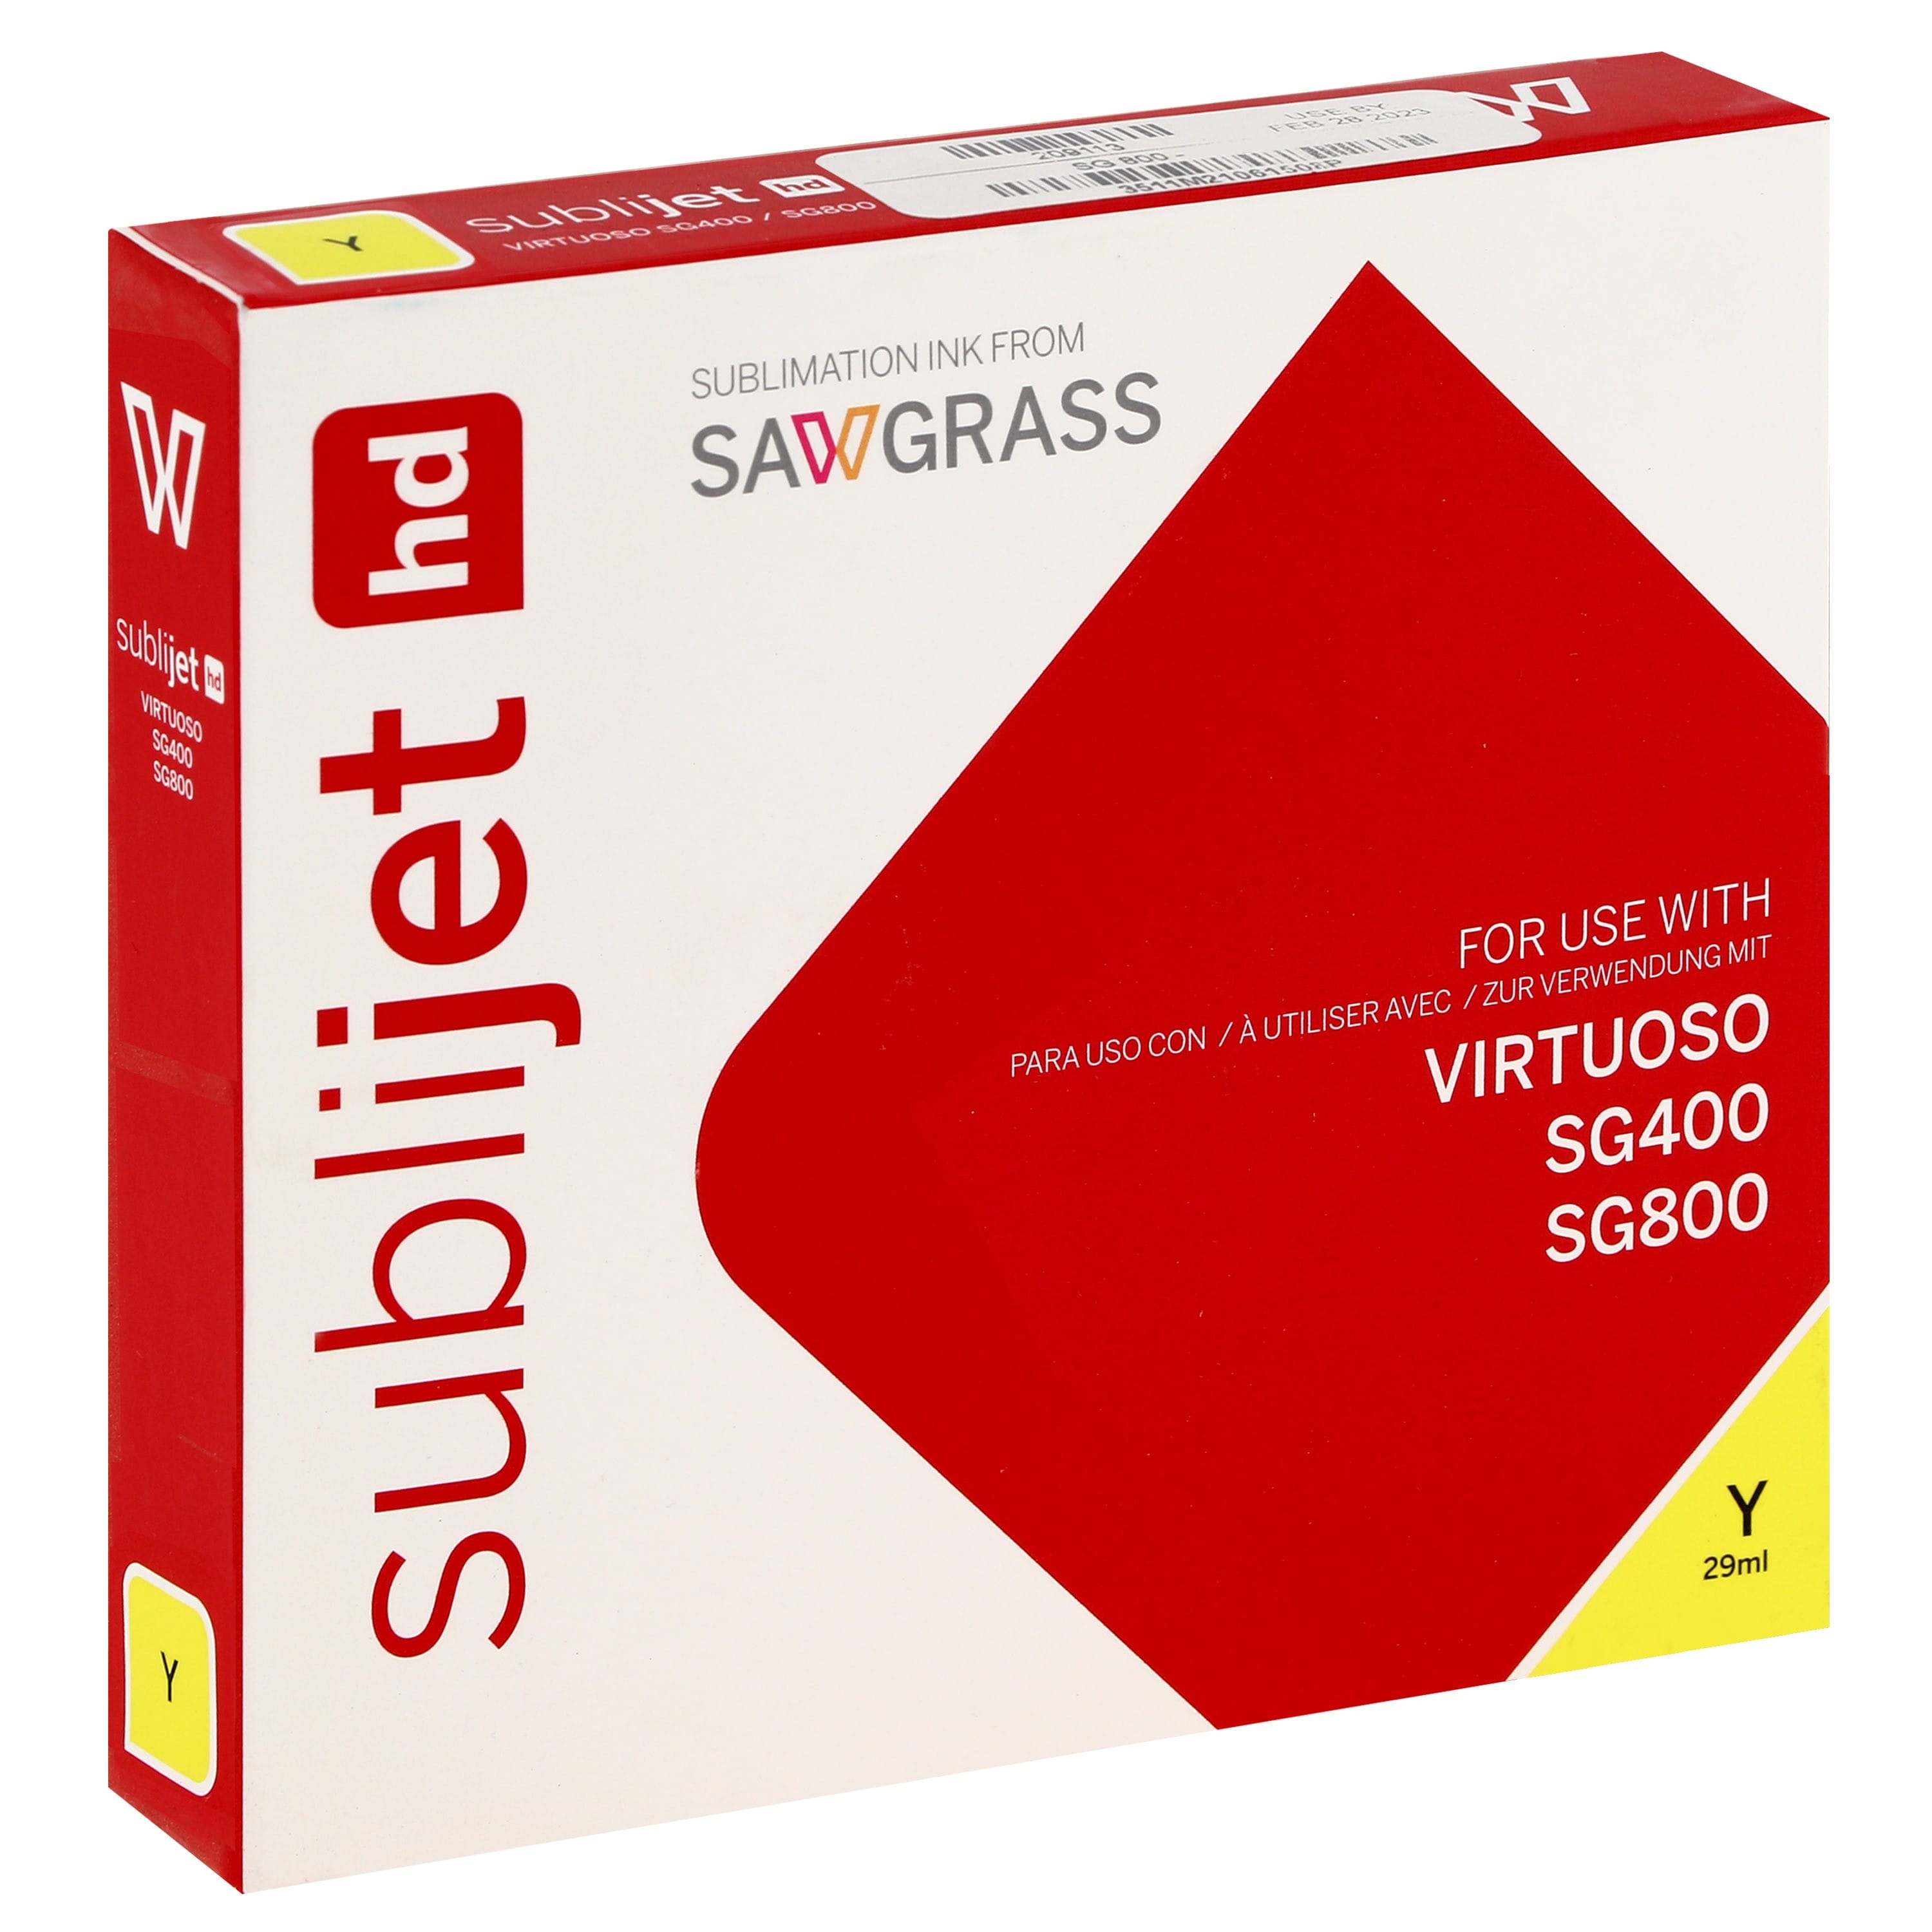 SAWGRASS - Encre sublimation Sublijet - Jaune 29ml - pour Sawgrass SG400 & SG800